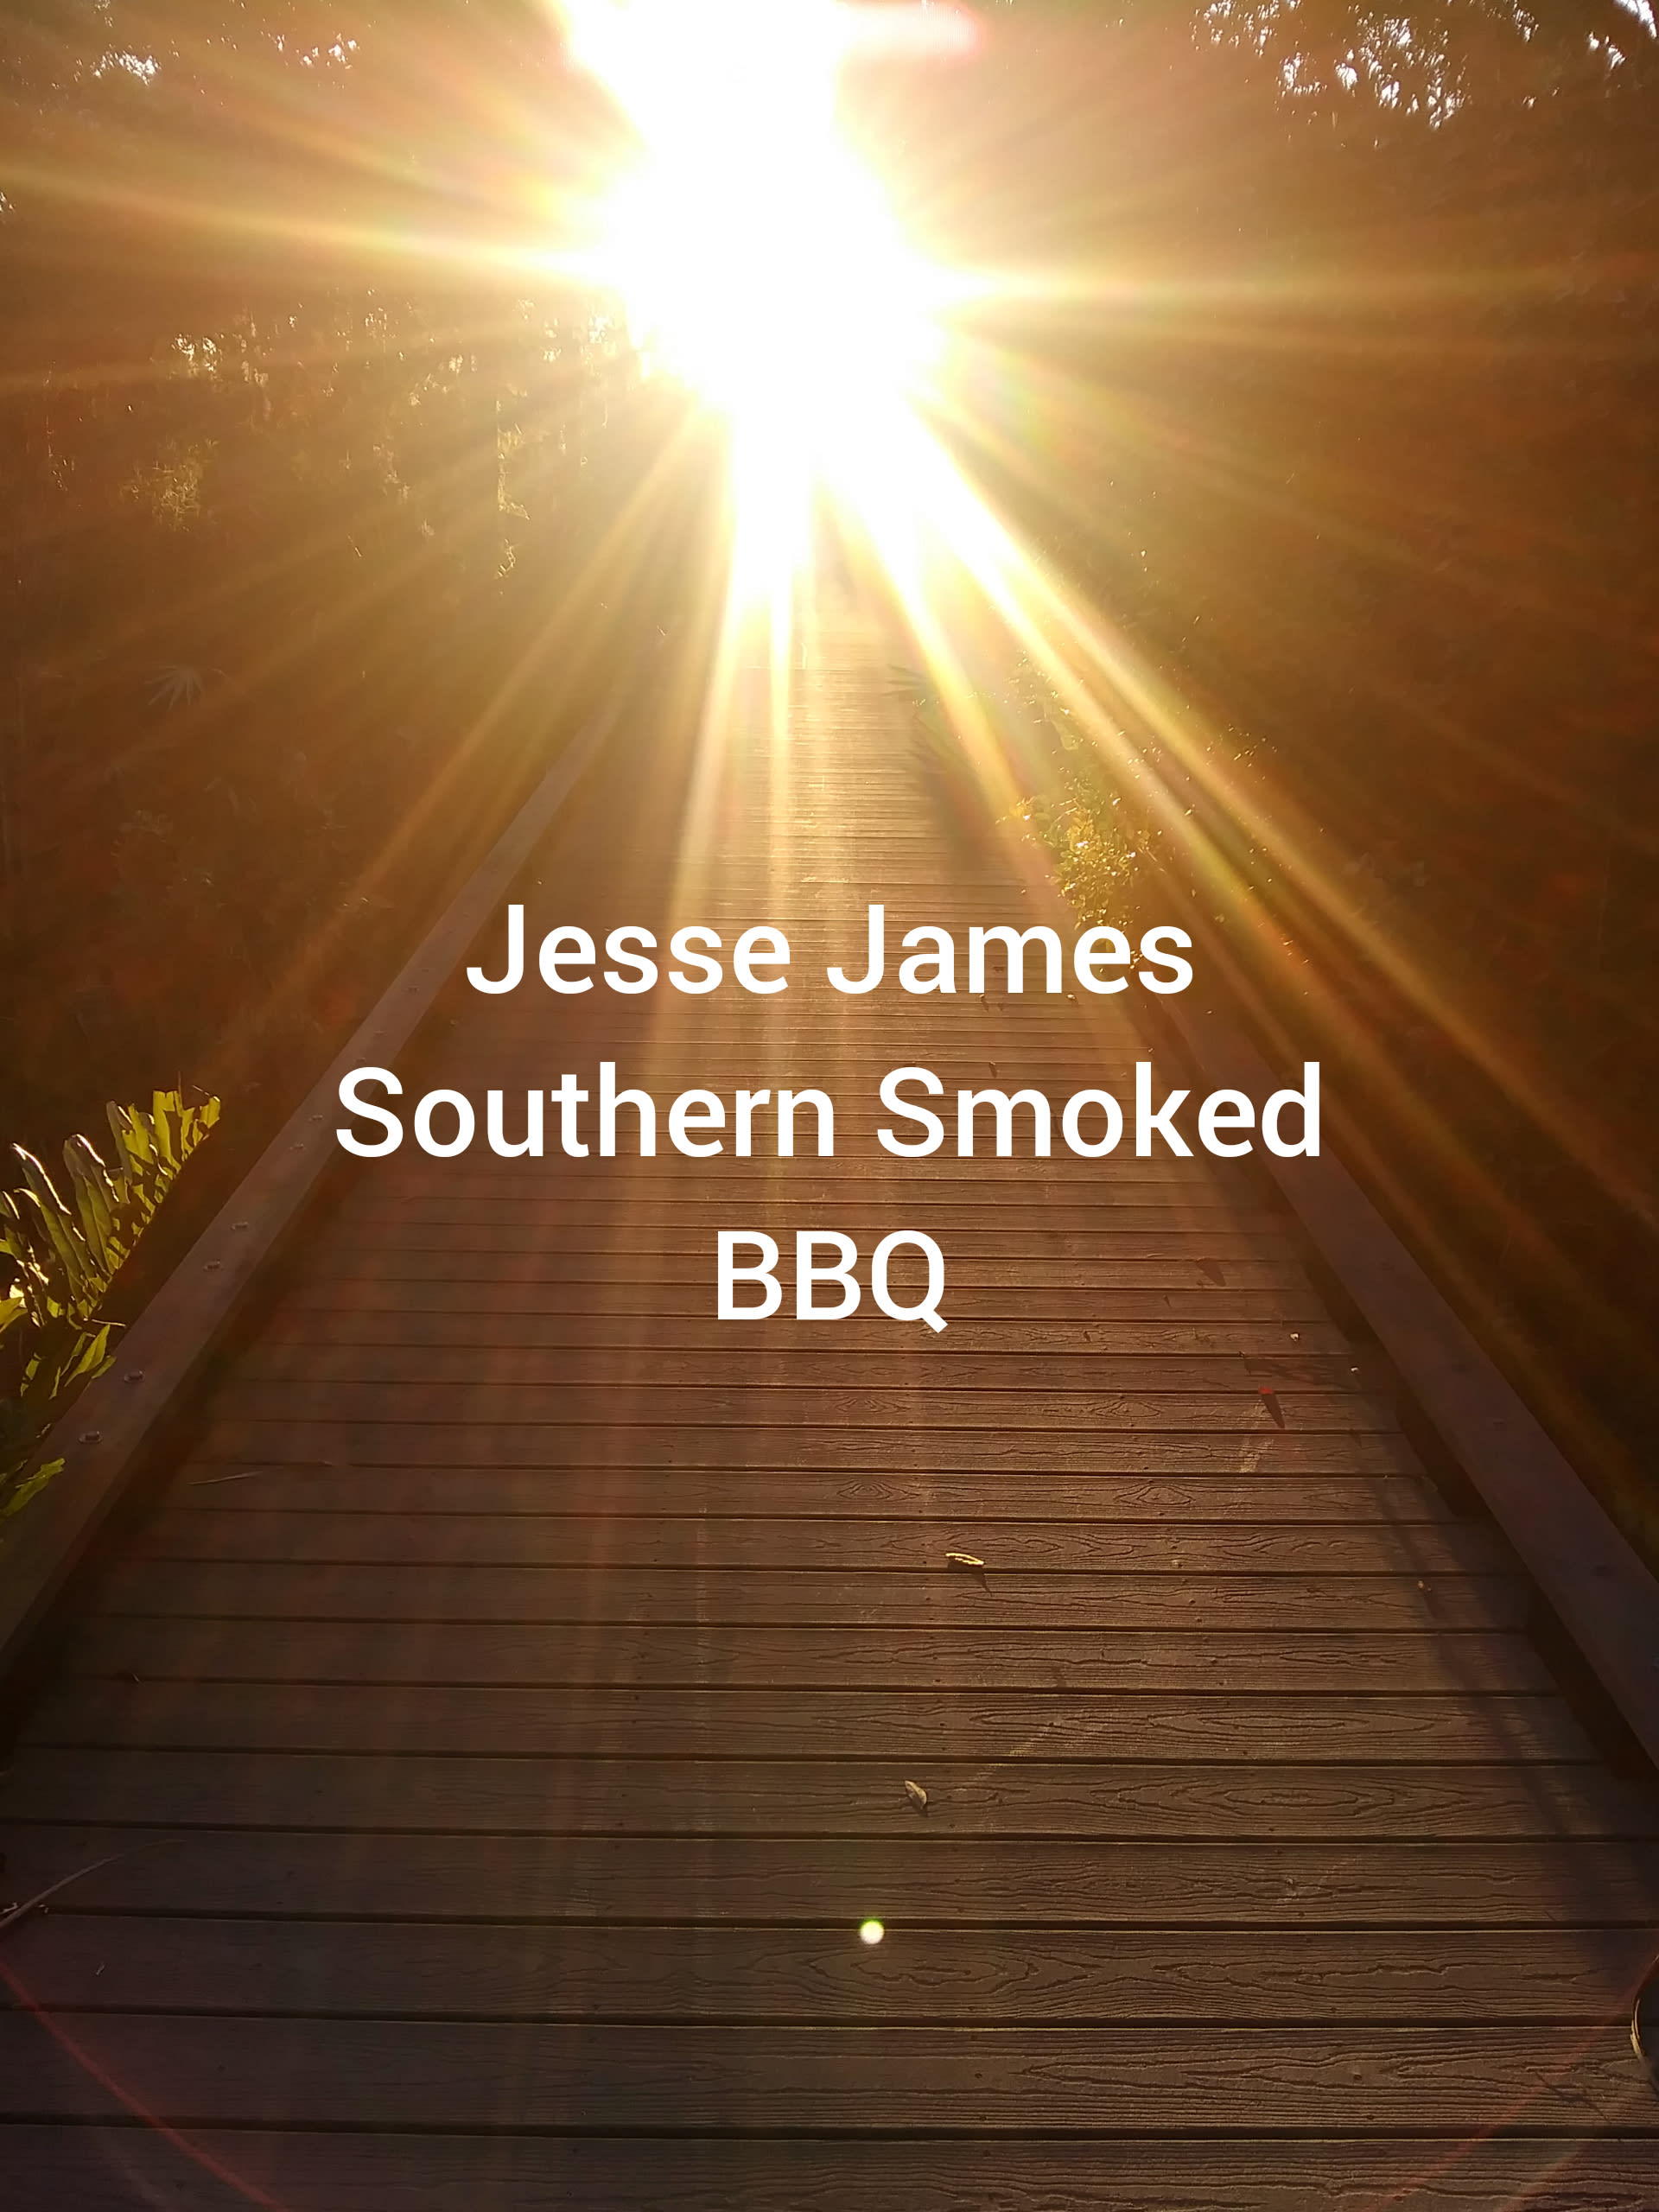 Jesse James Southern Smoked BBQ